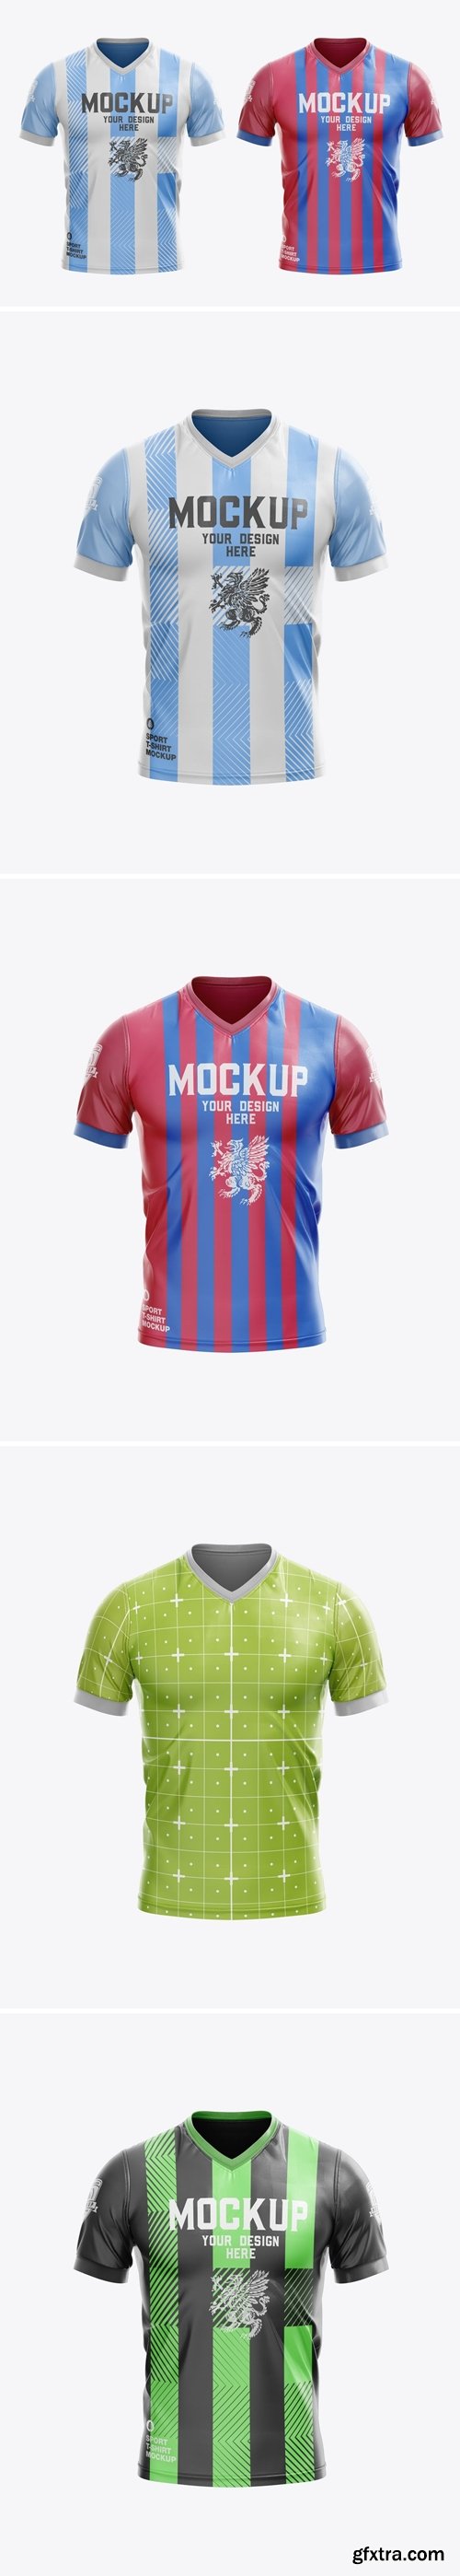 Soccer Men’s Sports T-shirt Mockup